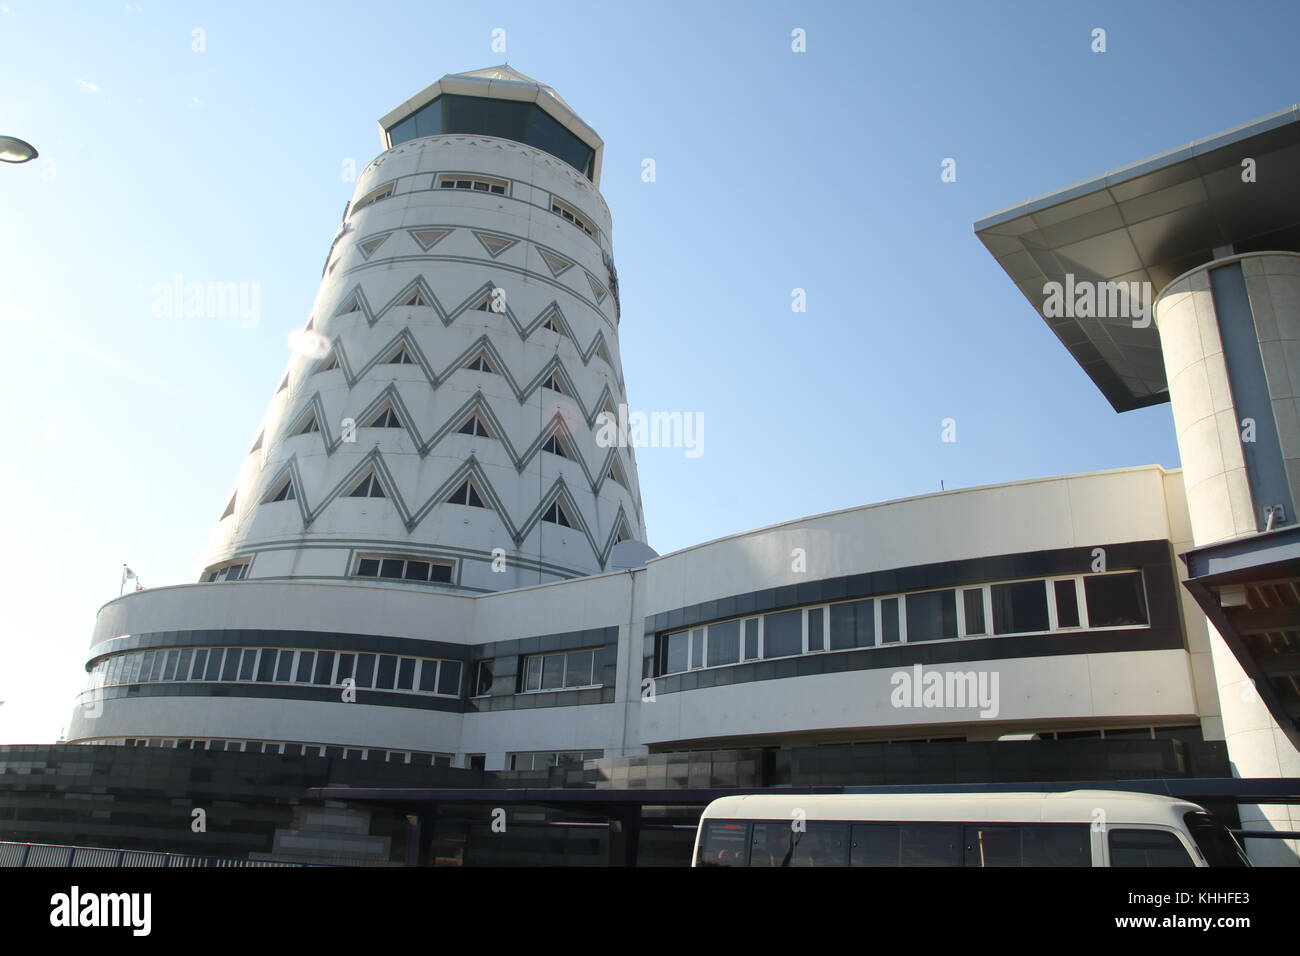 Harare, Zimbabwe - 10 October 2011: The conical shaped tower at Harare International Airport. Credit: David Mbiyu/Alamy Live News Stock Photo